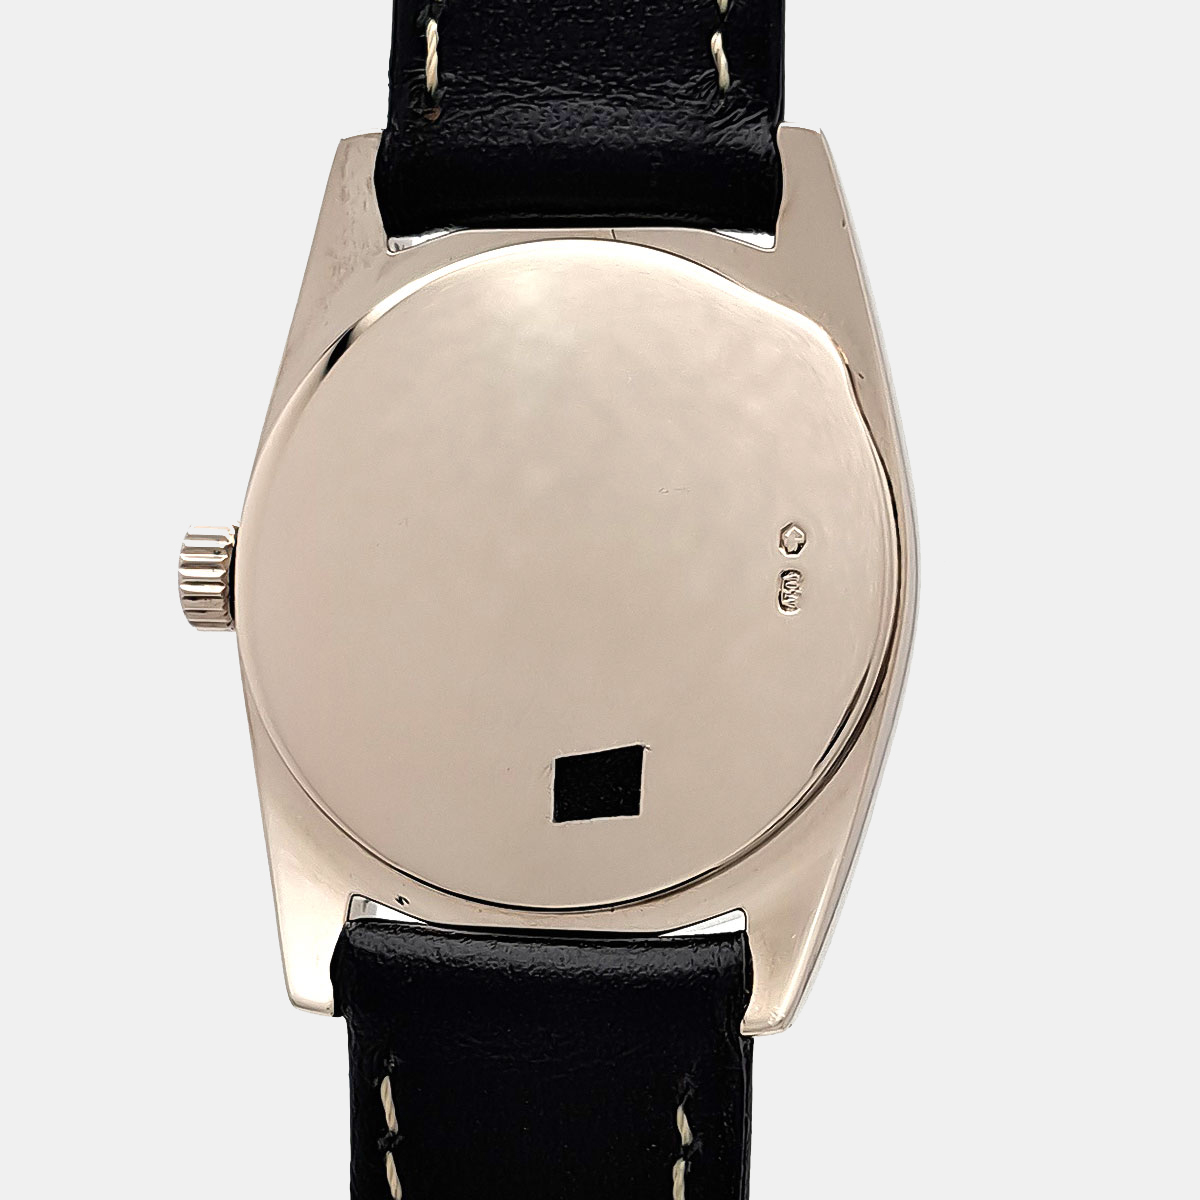 Rolex White 18k White Gold Cellini 4233 Quartz Women's Wristwatch 25 Mm